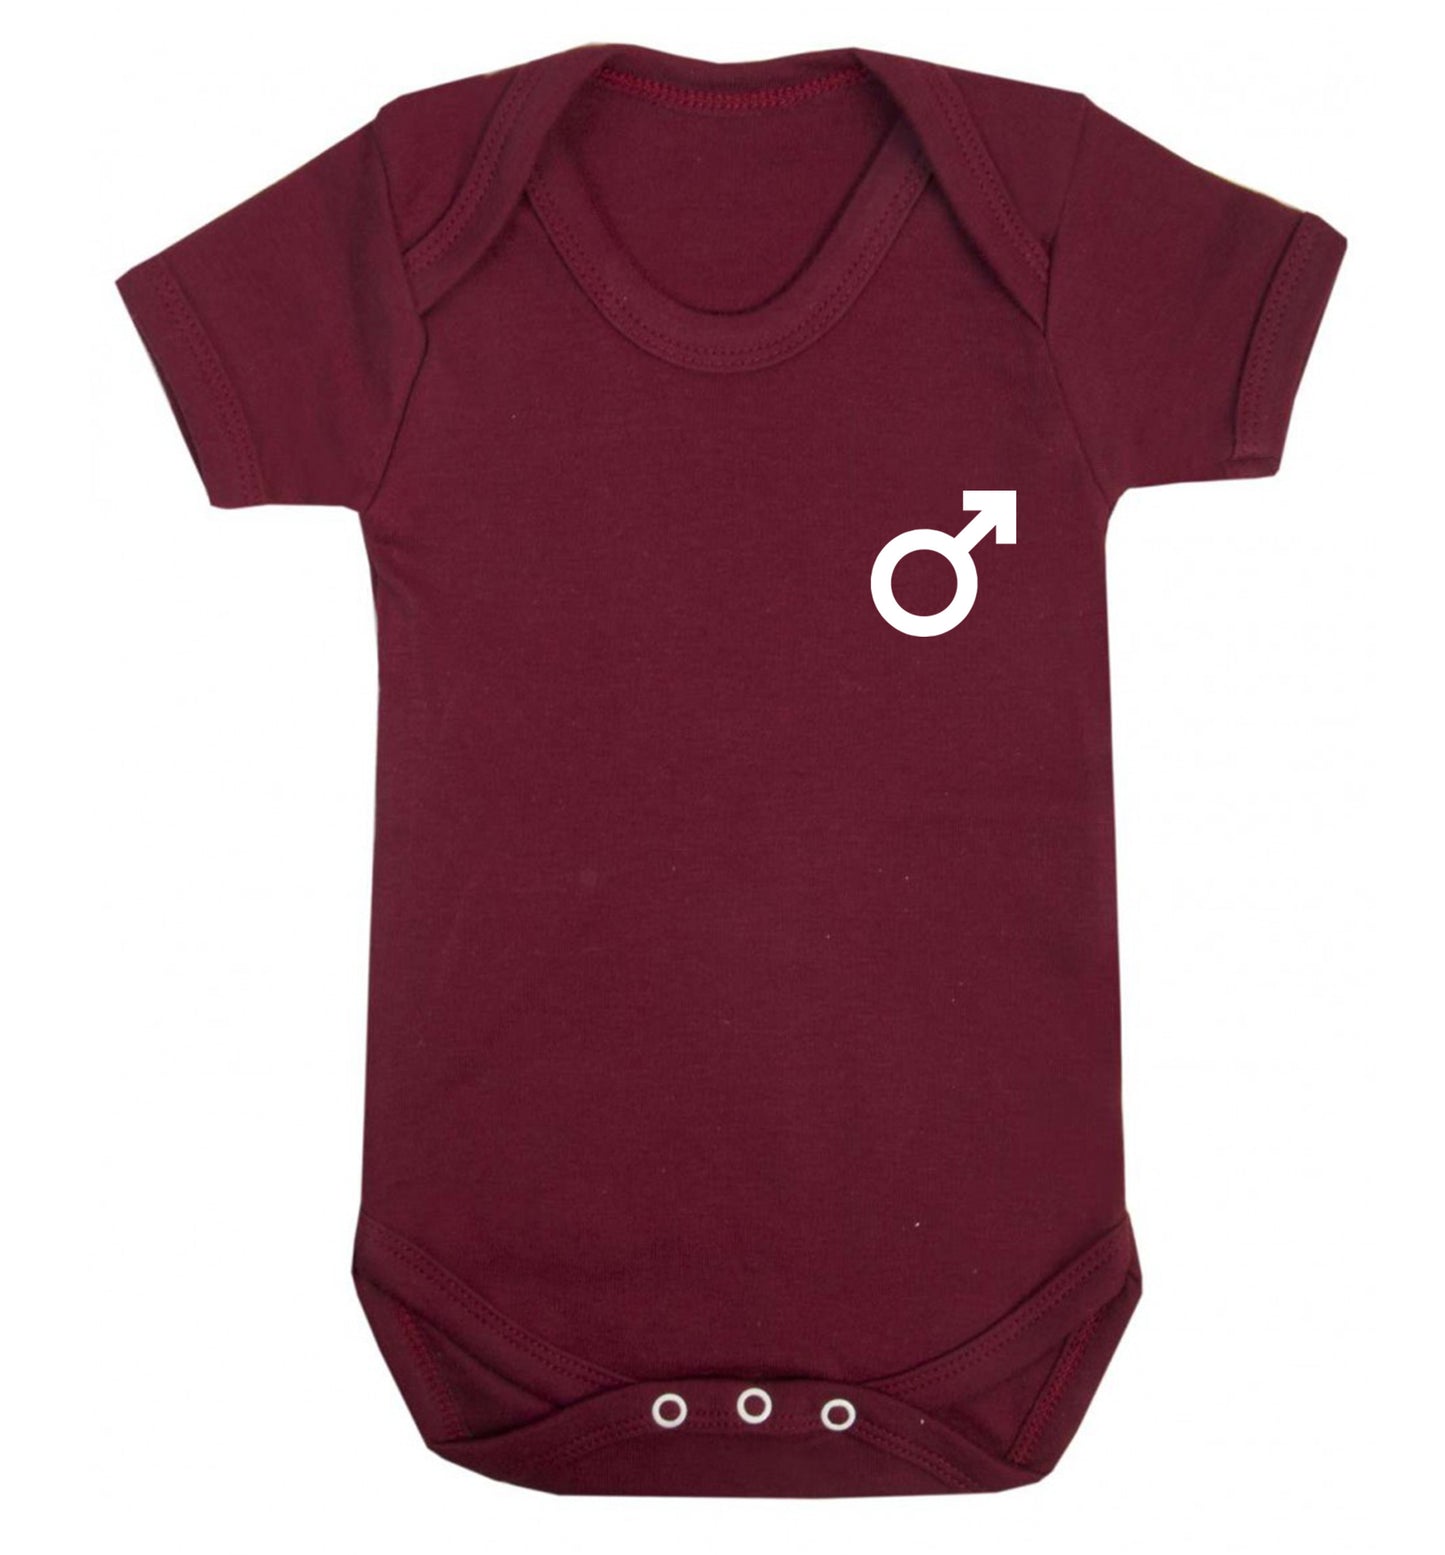 Male symbol pocket Baby Vest maroon 18-24 months